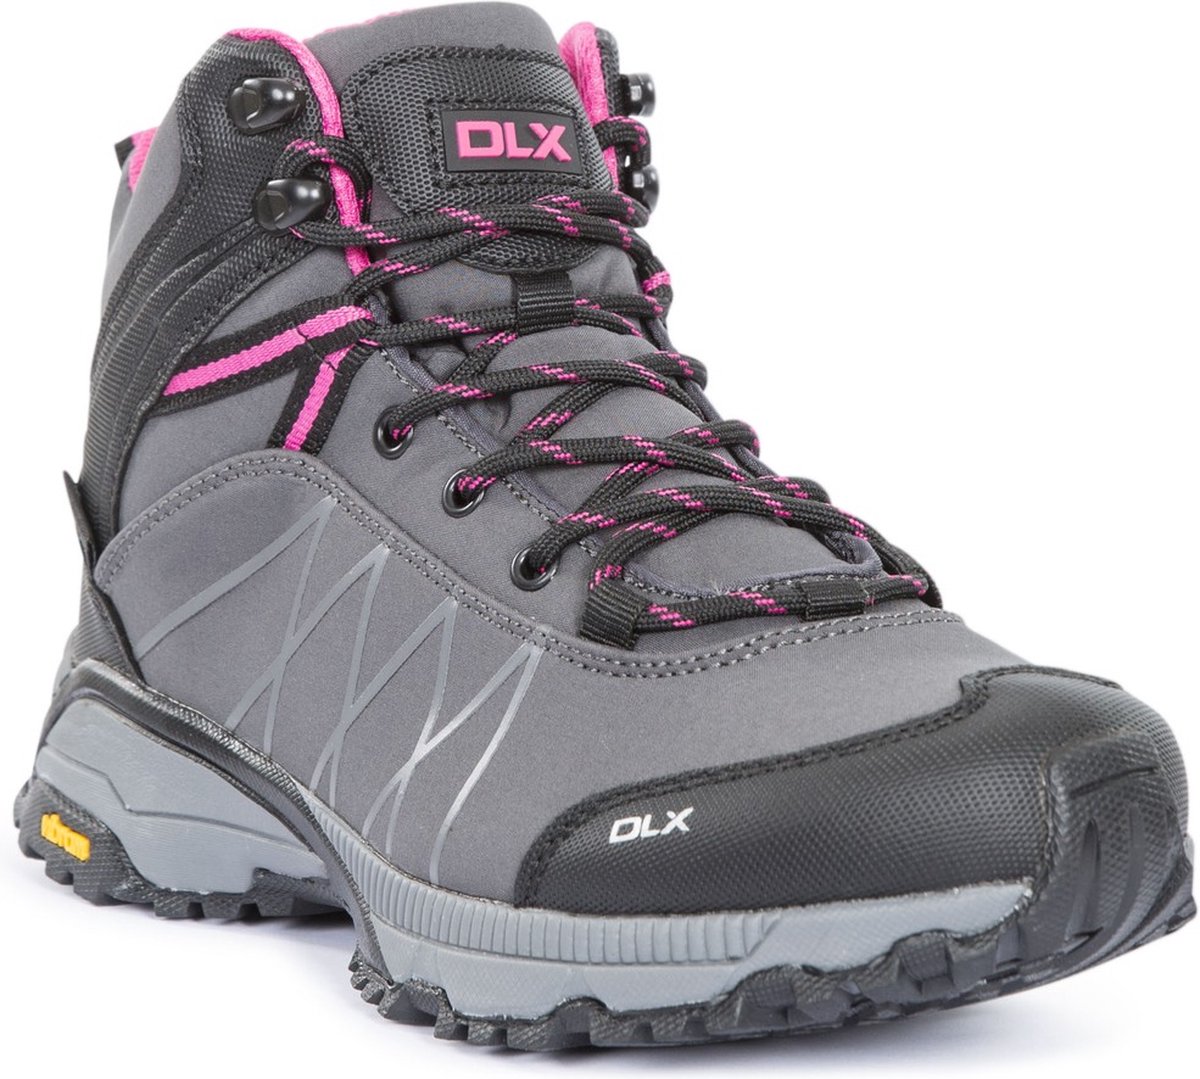 DLX Damen Wanderschuhe Arlington Ii - Female Dlx Hiking Boot Charcoal-39